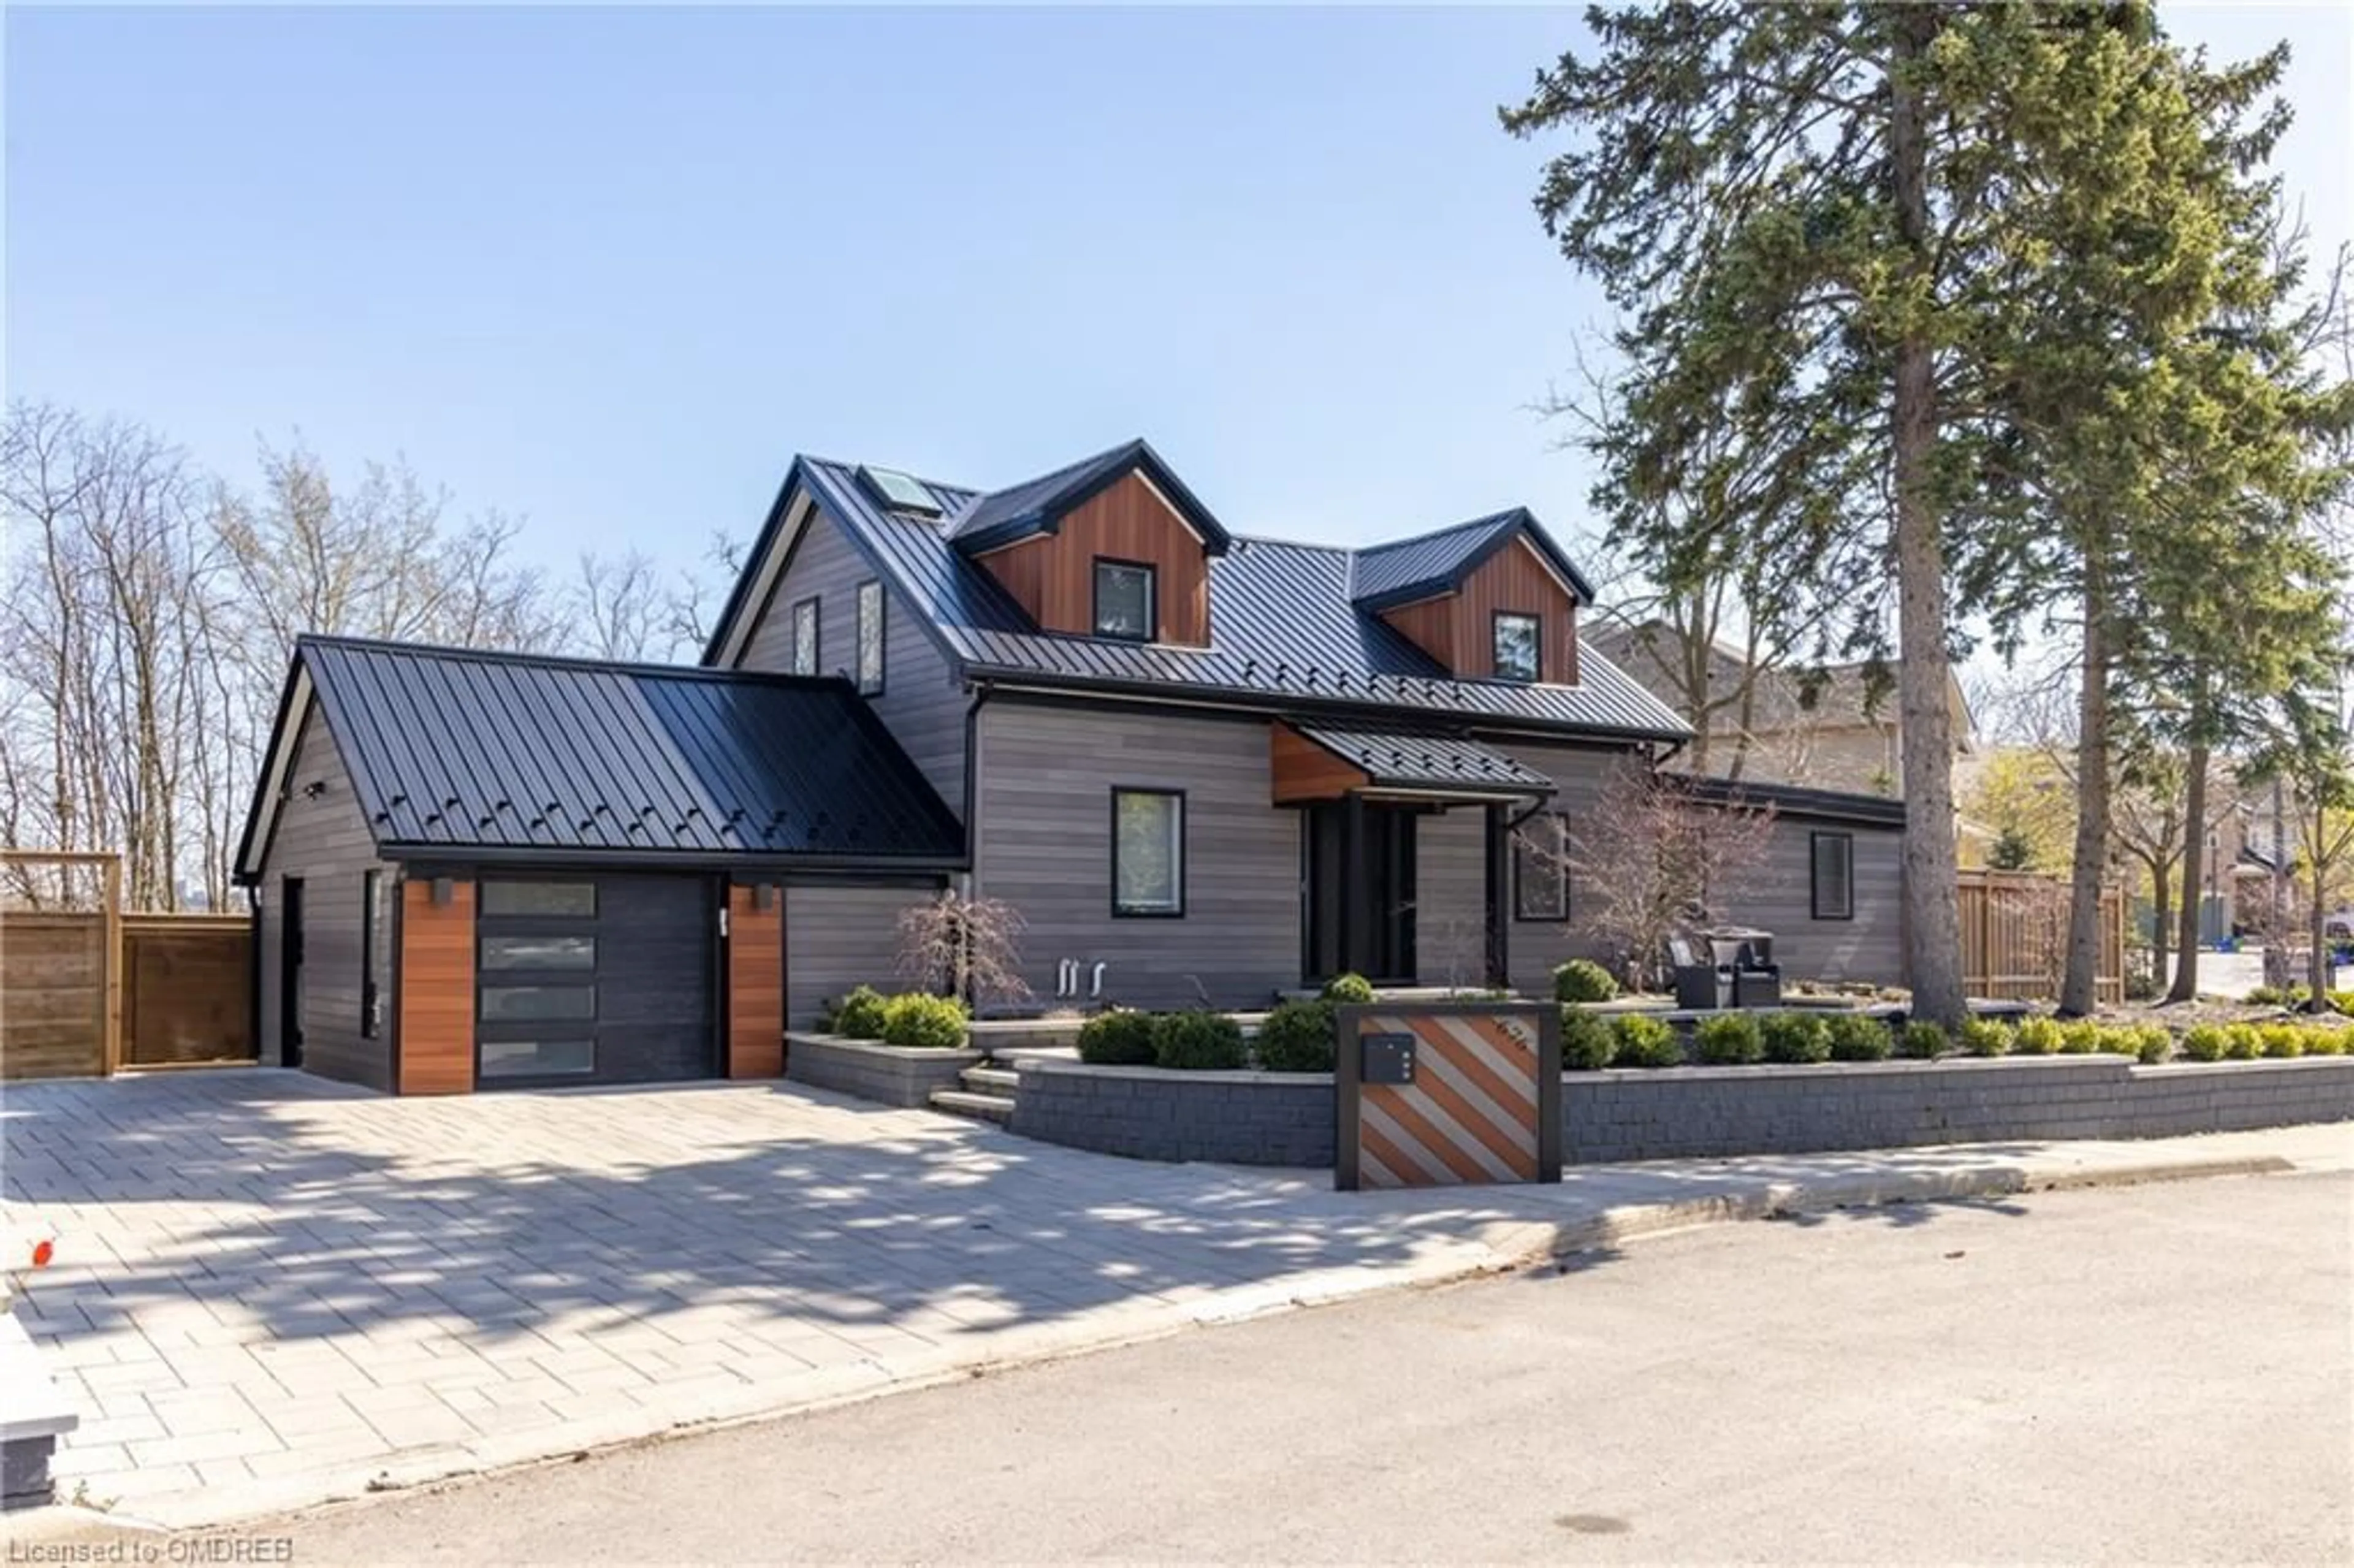 Home with brick exterior material for 676 Bayshore Blvd, Burlington Ontario L7T 1T2